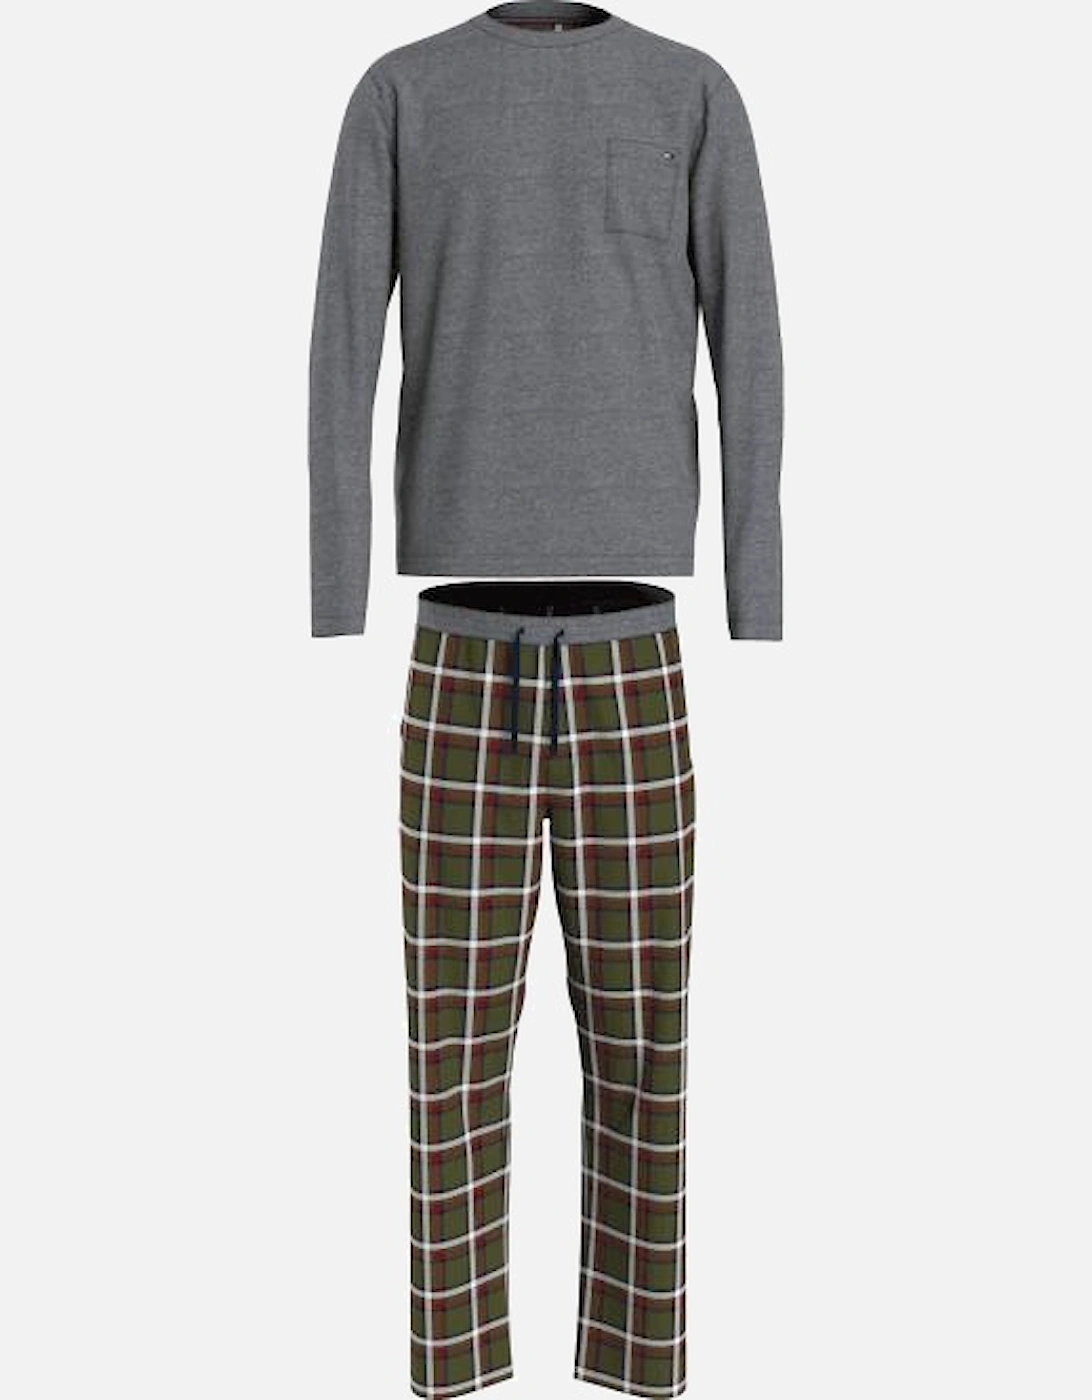 Long Sleeve Jersey & Flannel Check Pyjamas Gift Set, Grey/green, 14 of 13